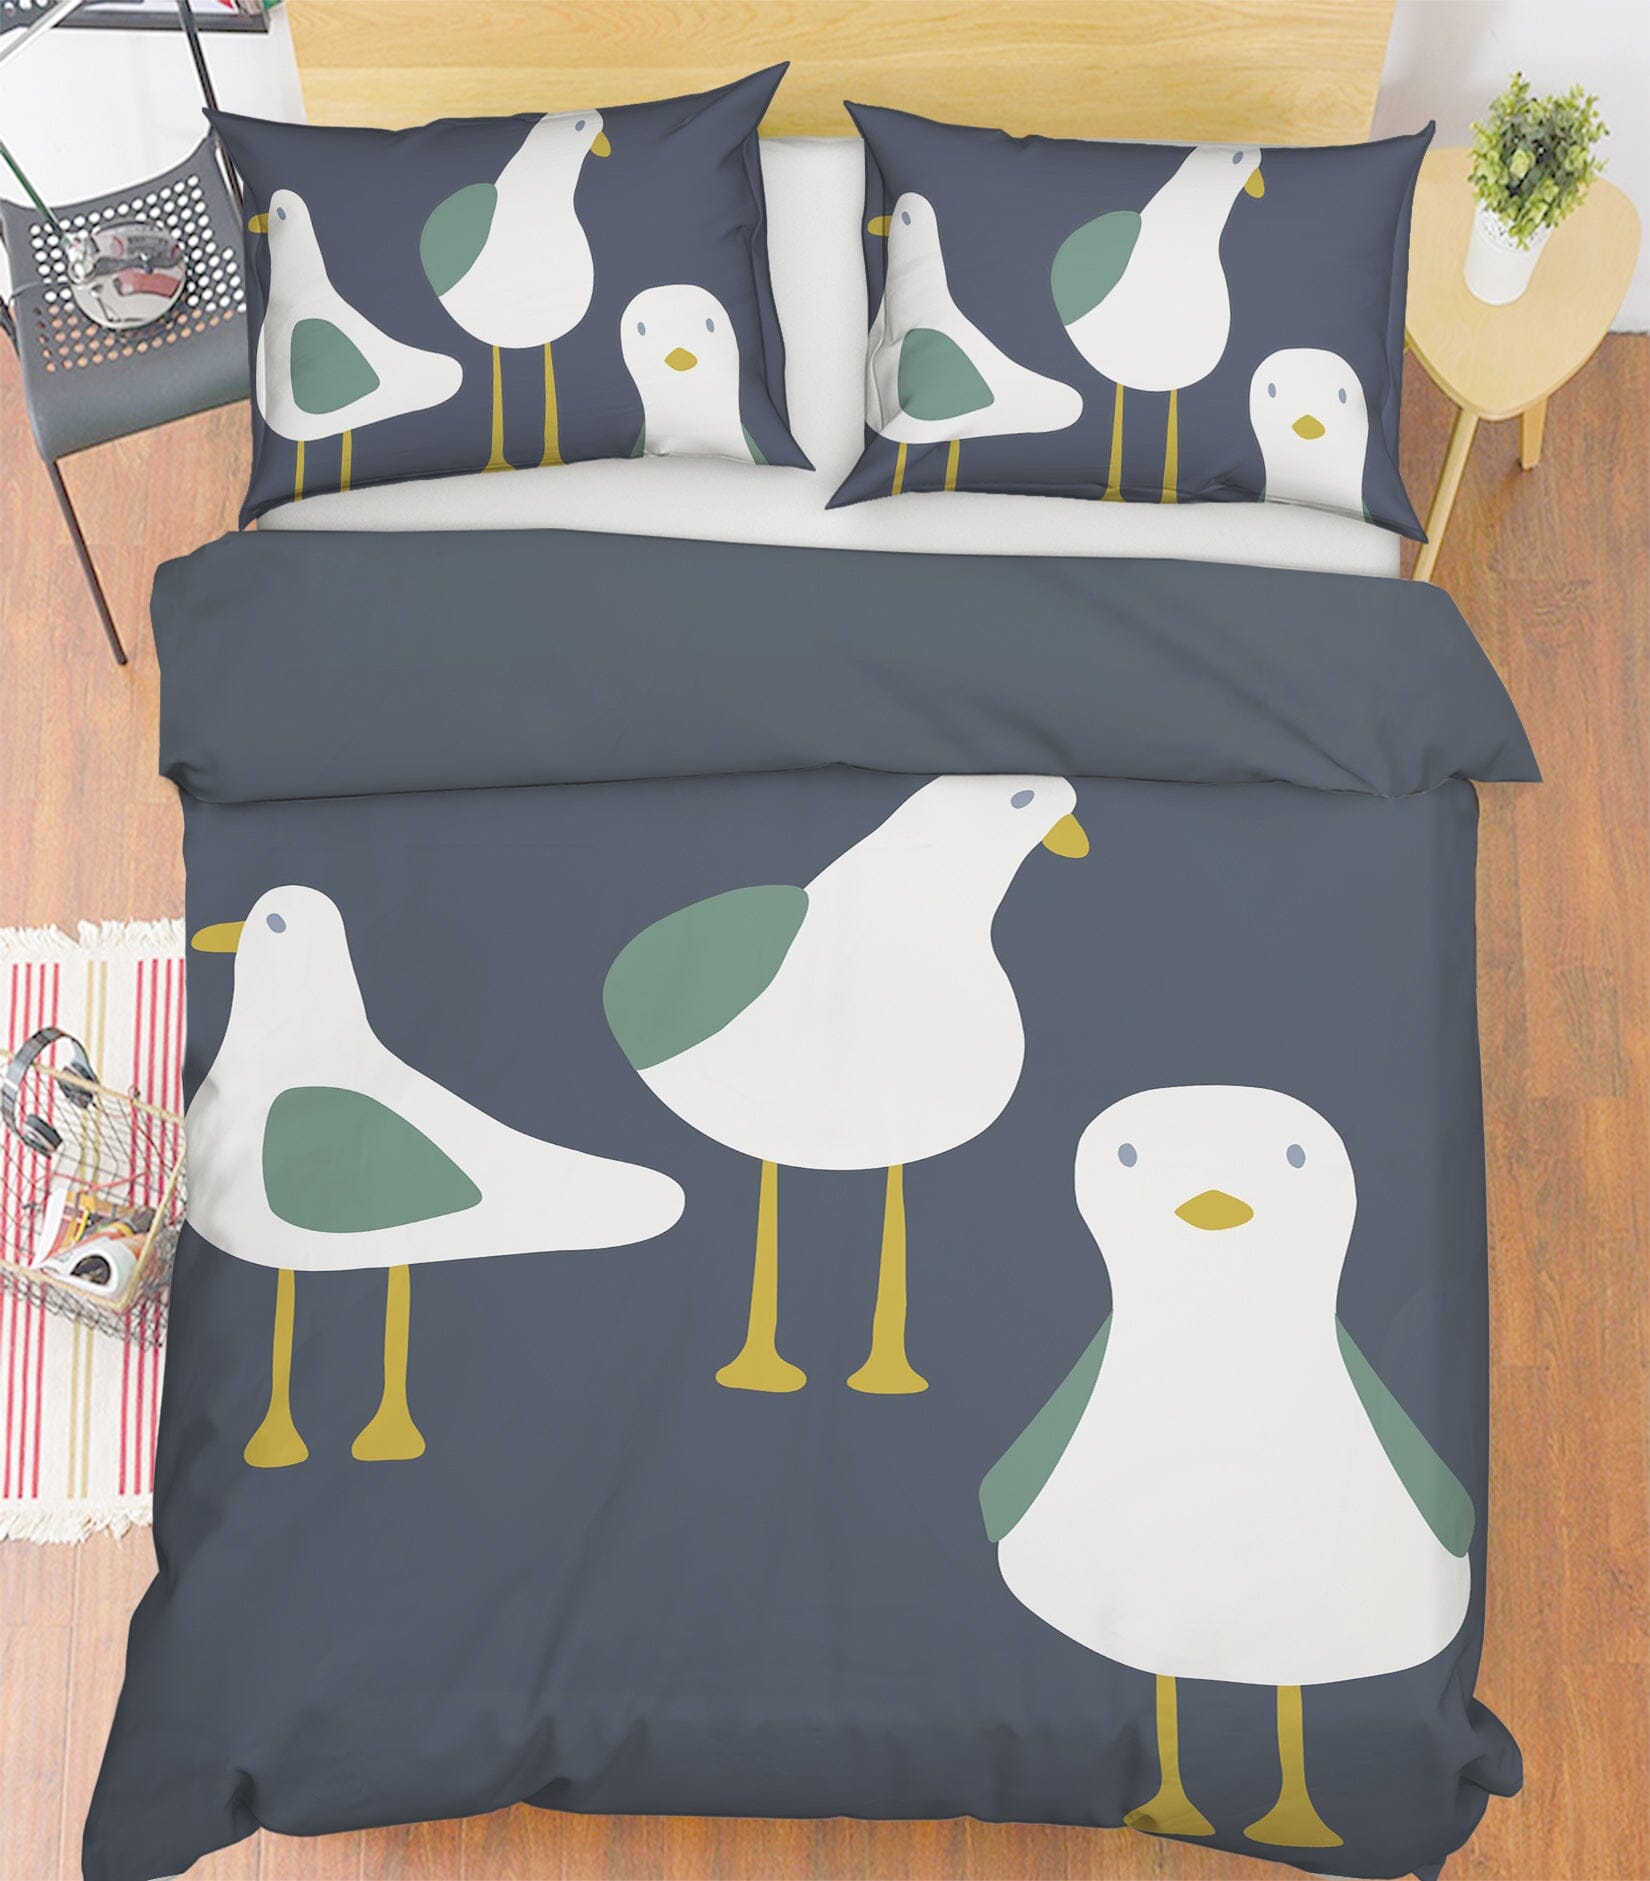 3D Cute Chick 2106 Jillian Helvey Bedding Bed Pillowcases Quilt Quiet Covers AJ Creativity Home 